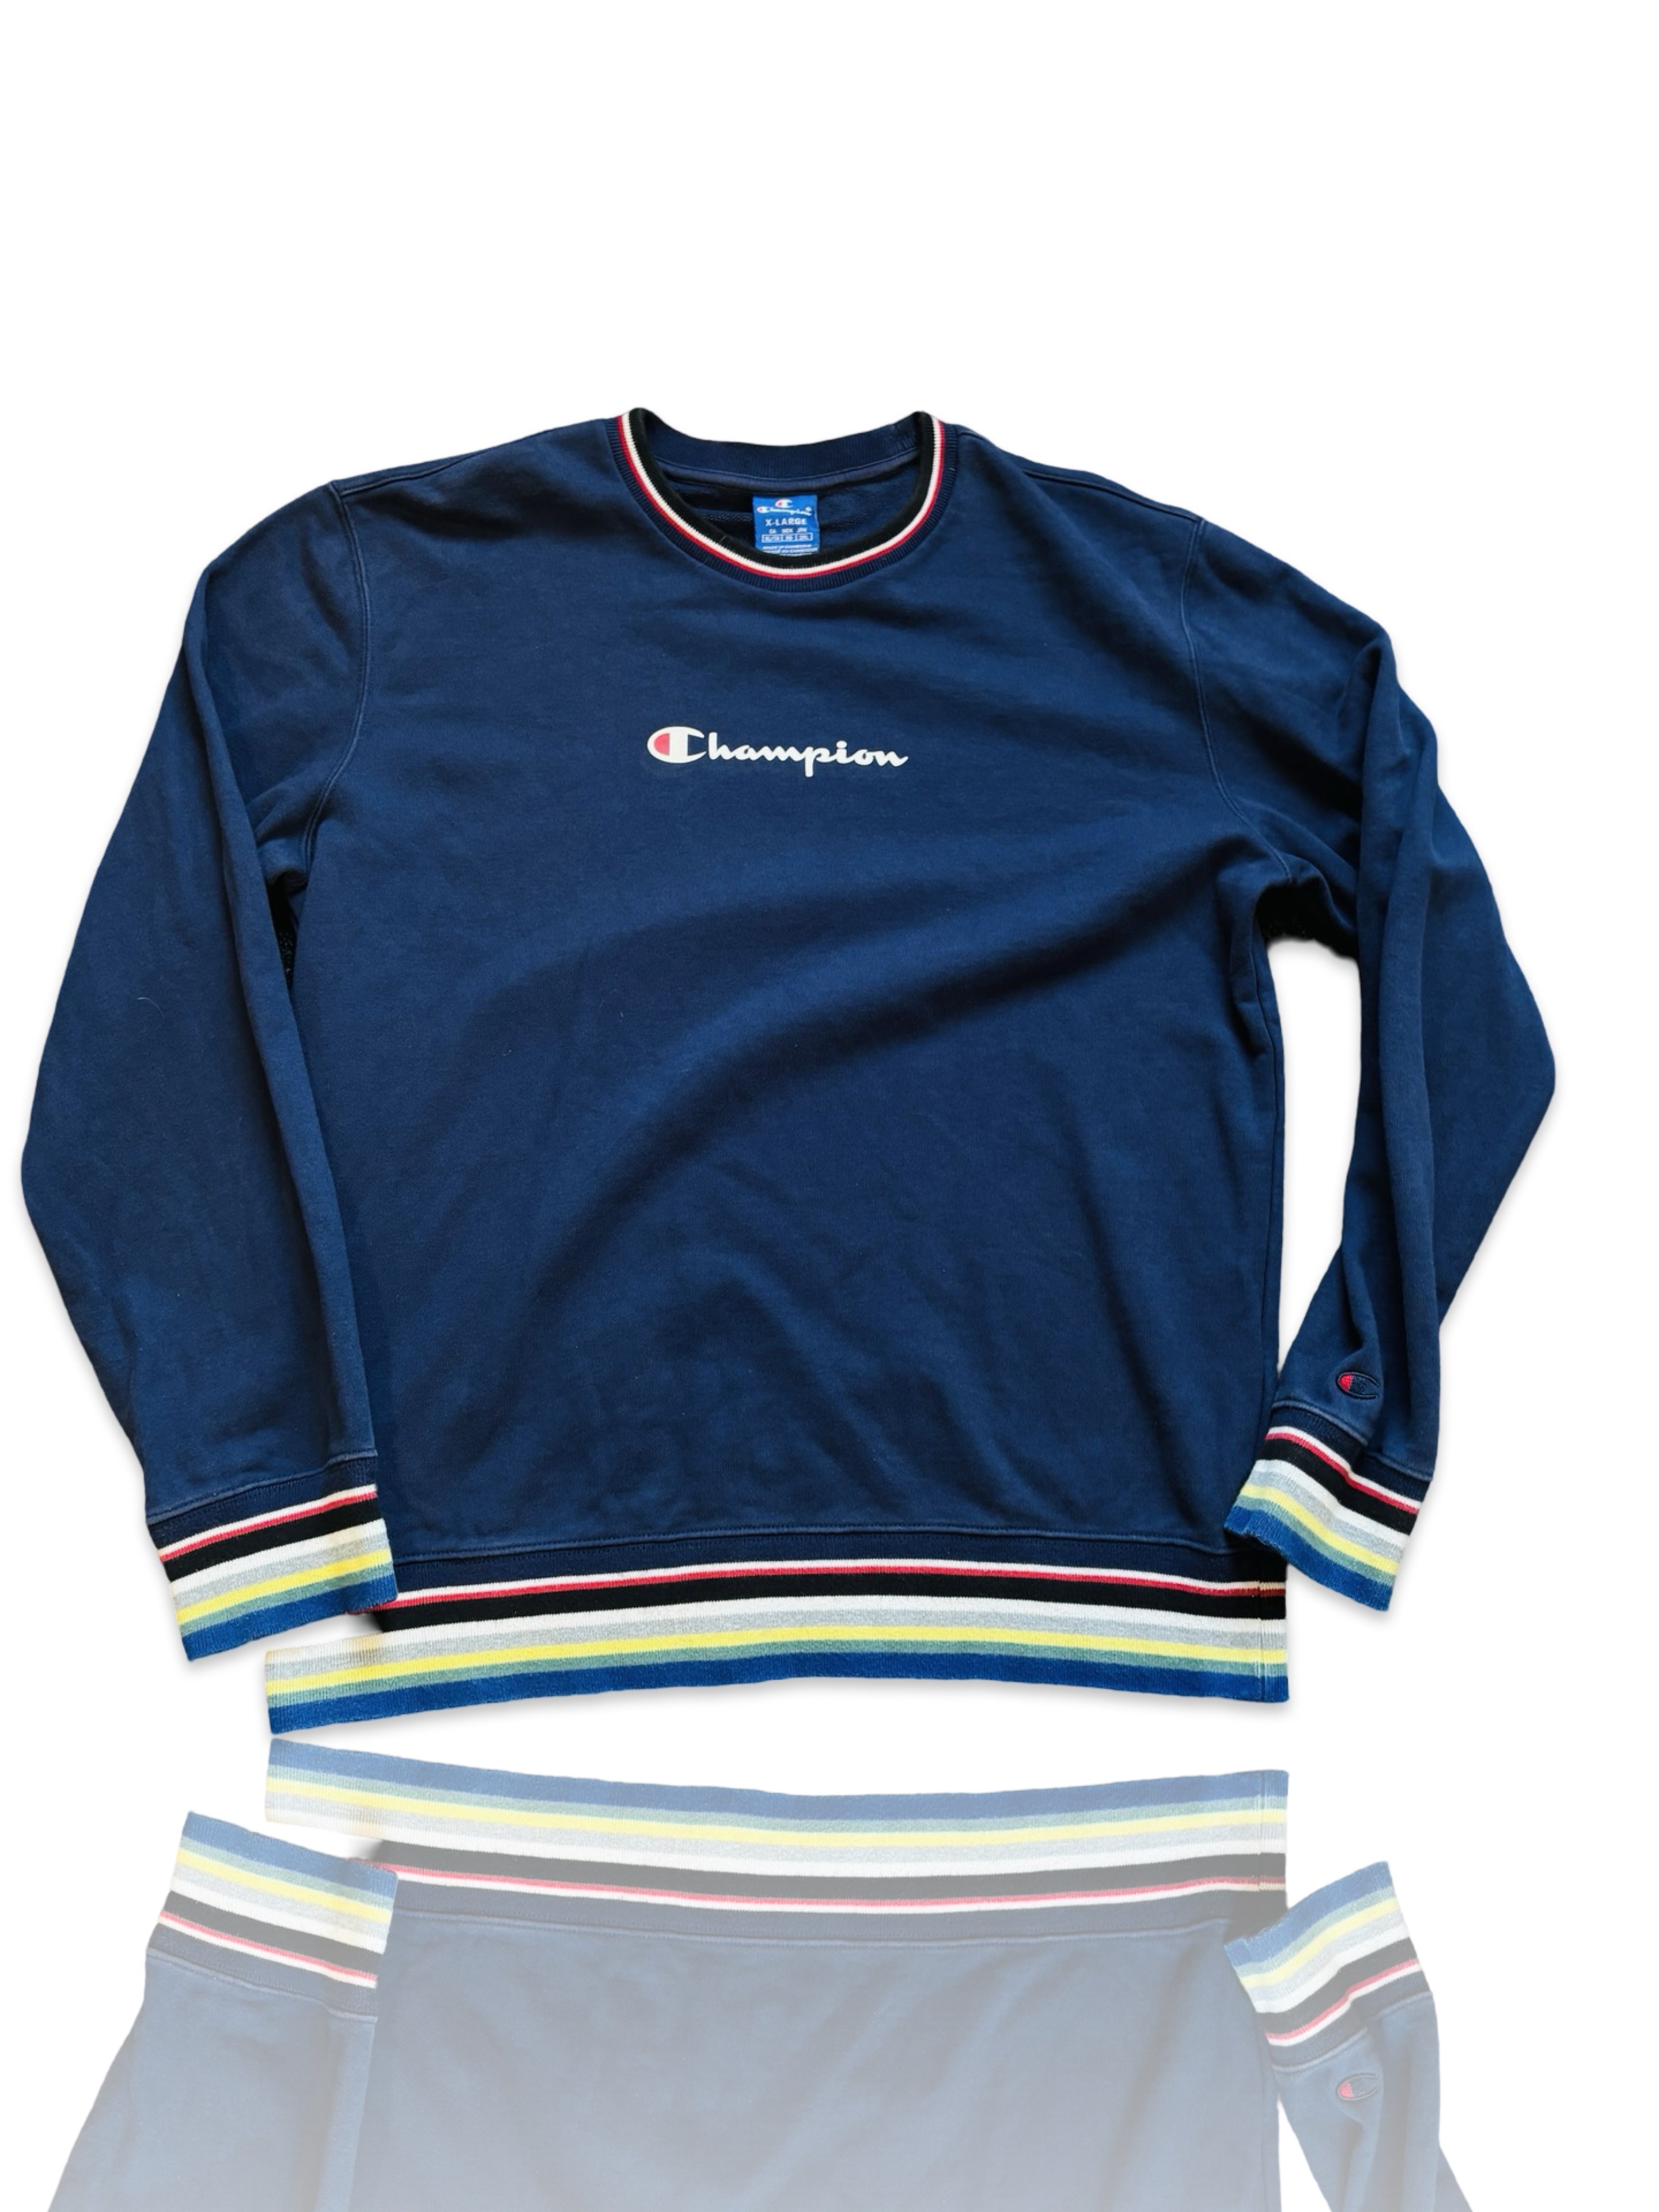 Men's Reverse Weave Premium Collection | Champion Official"Vintage Navy Champion Sweatshirt With Multicolored Cuffs - Men's Reverse Weave Premium Collection | Champion Official SKU- 4073